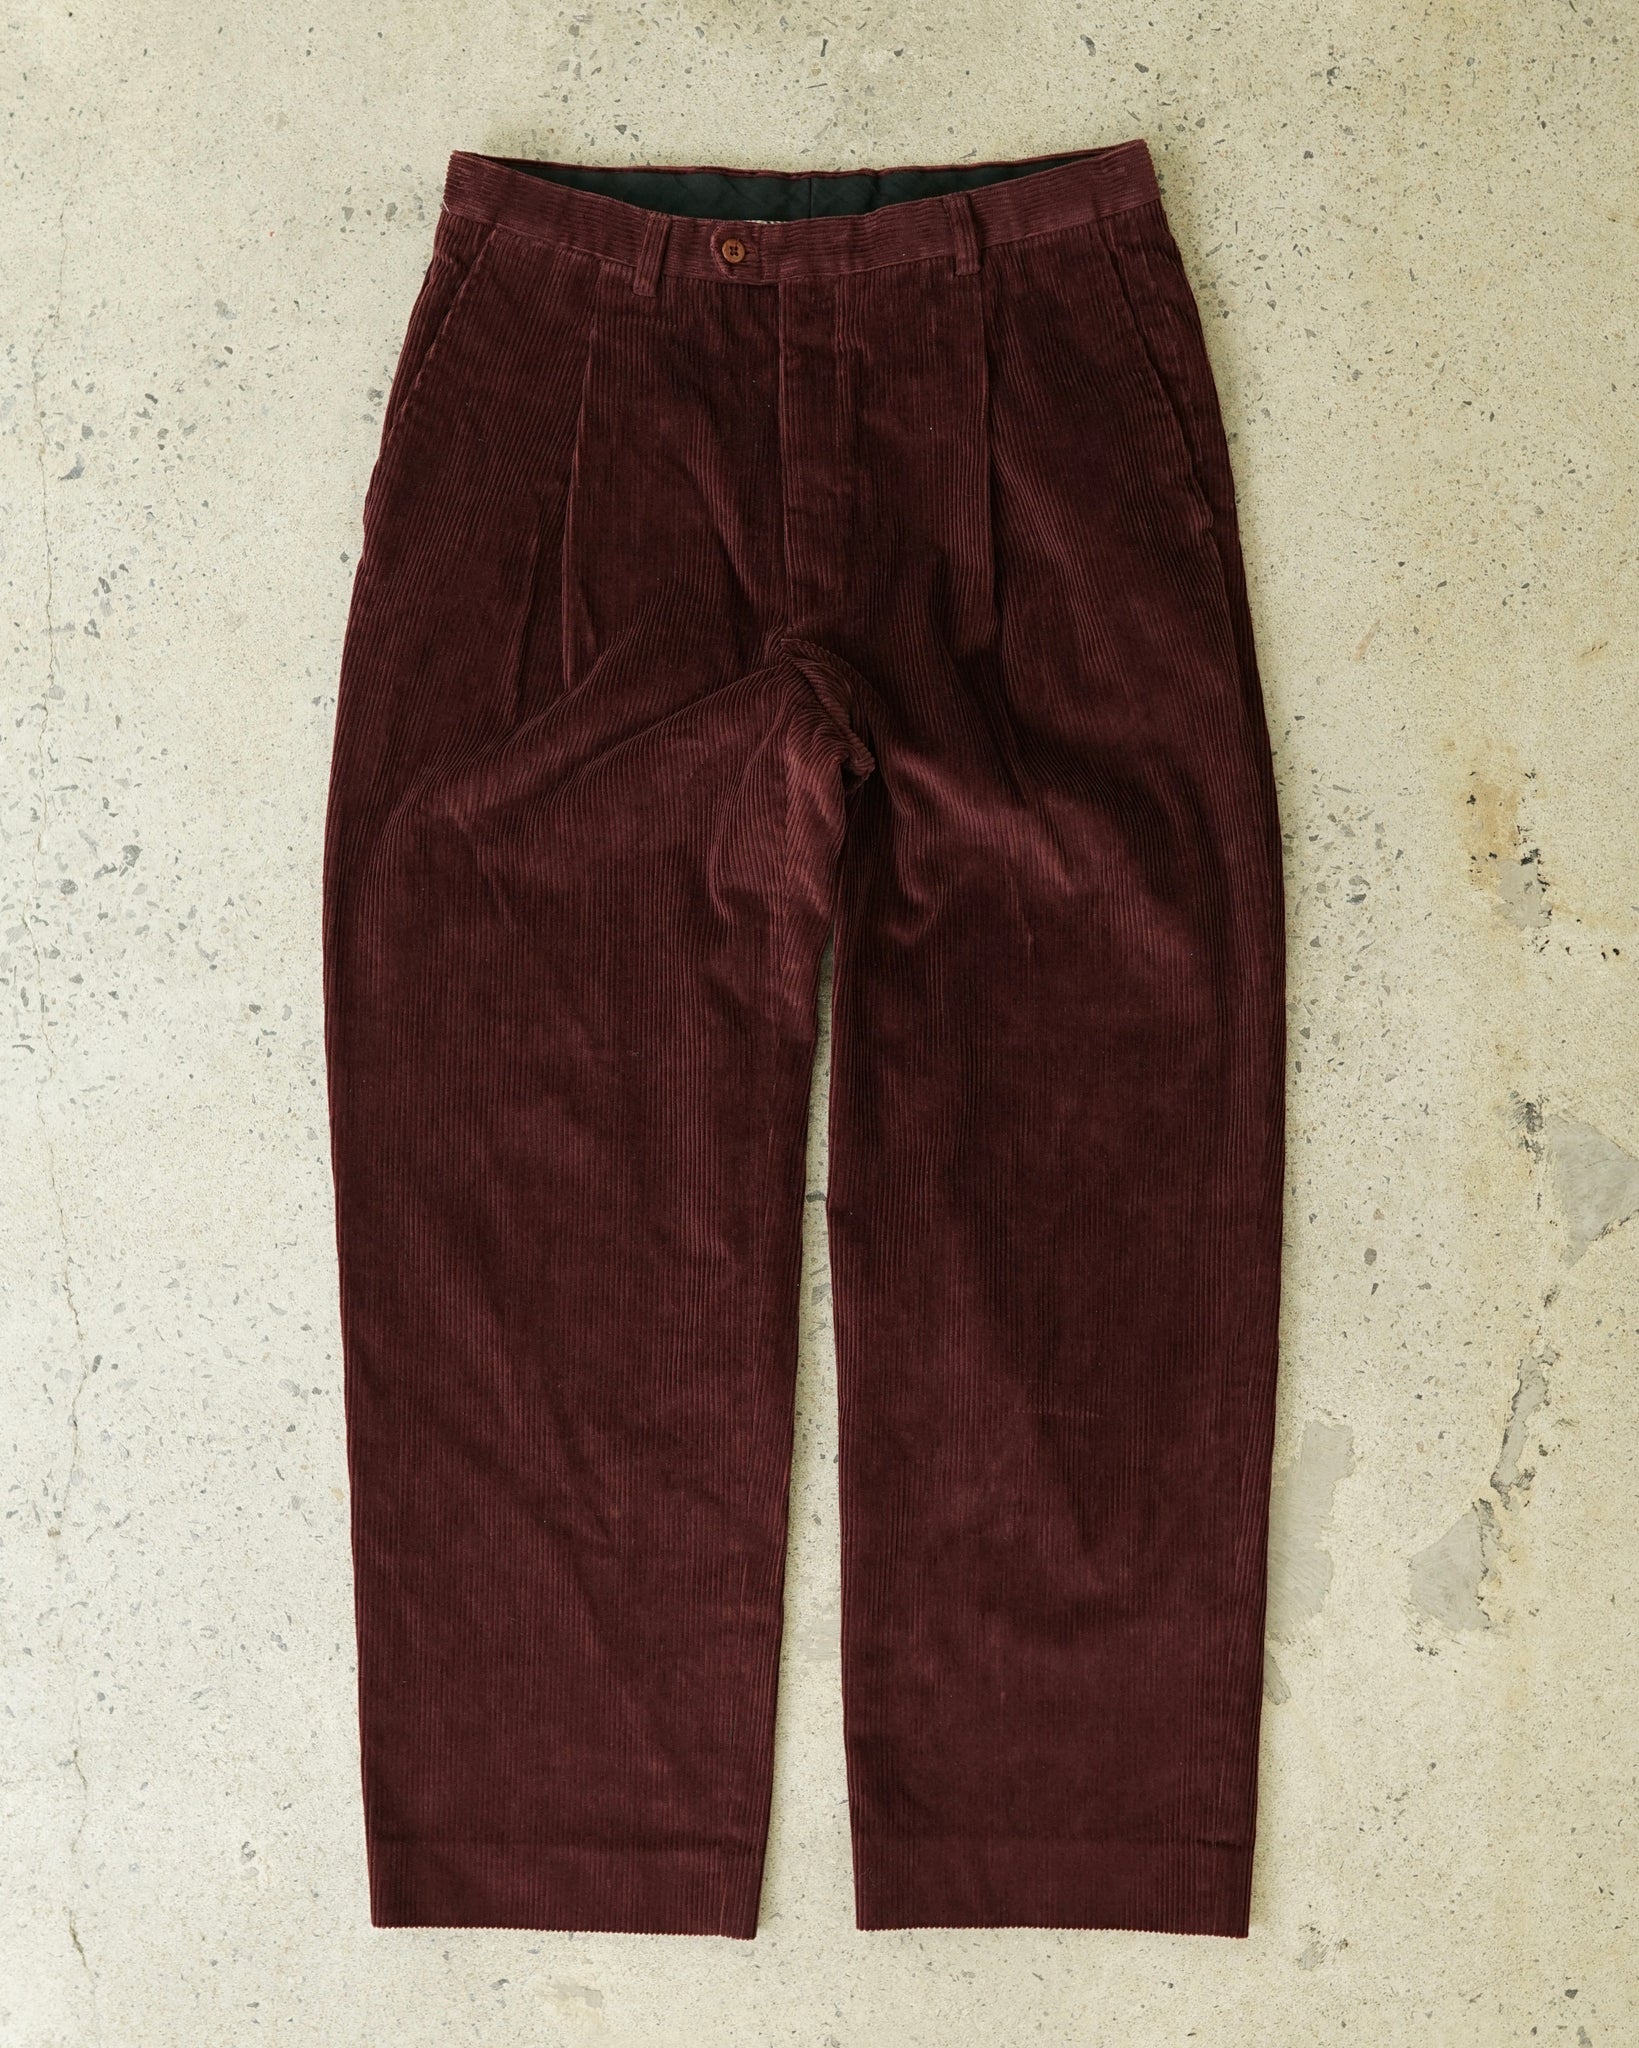 burberry corduroy pants - 31x28.5